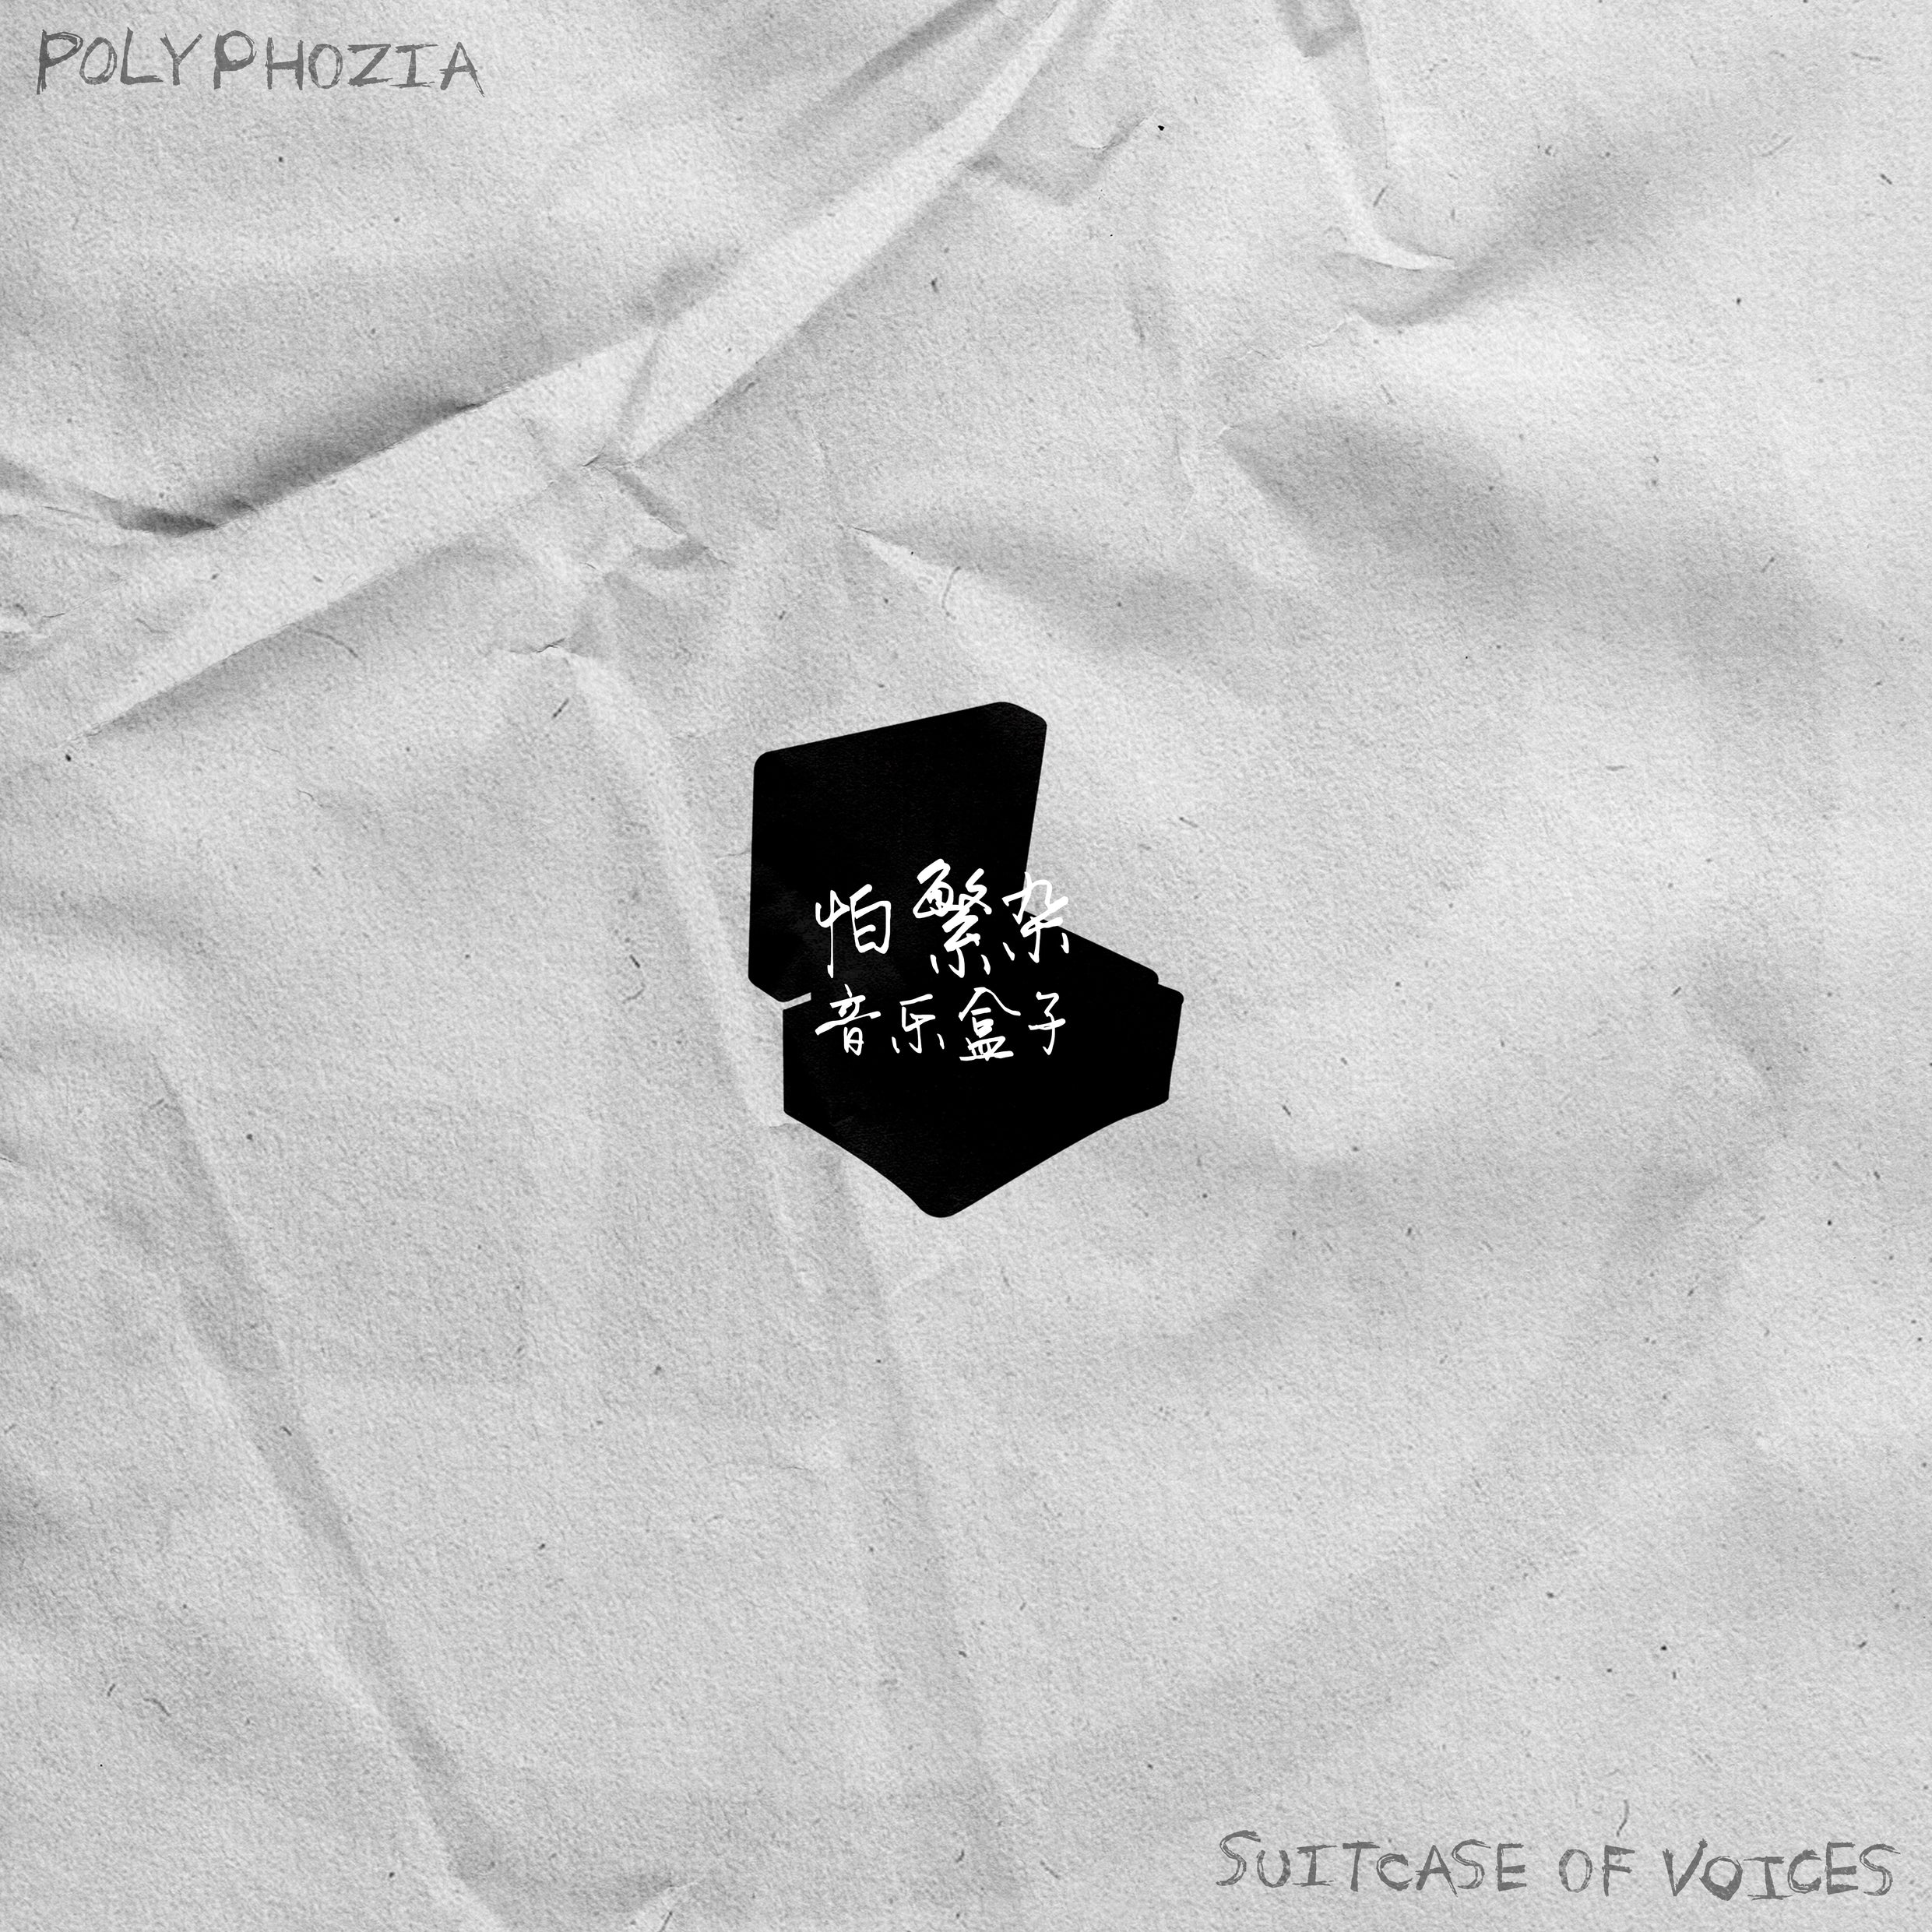 POLYPHOZIA - Suitcase of Voices